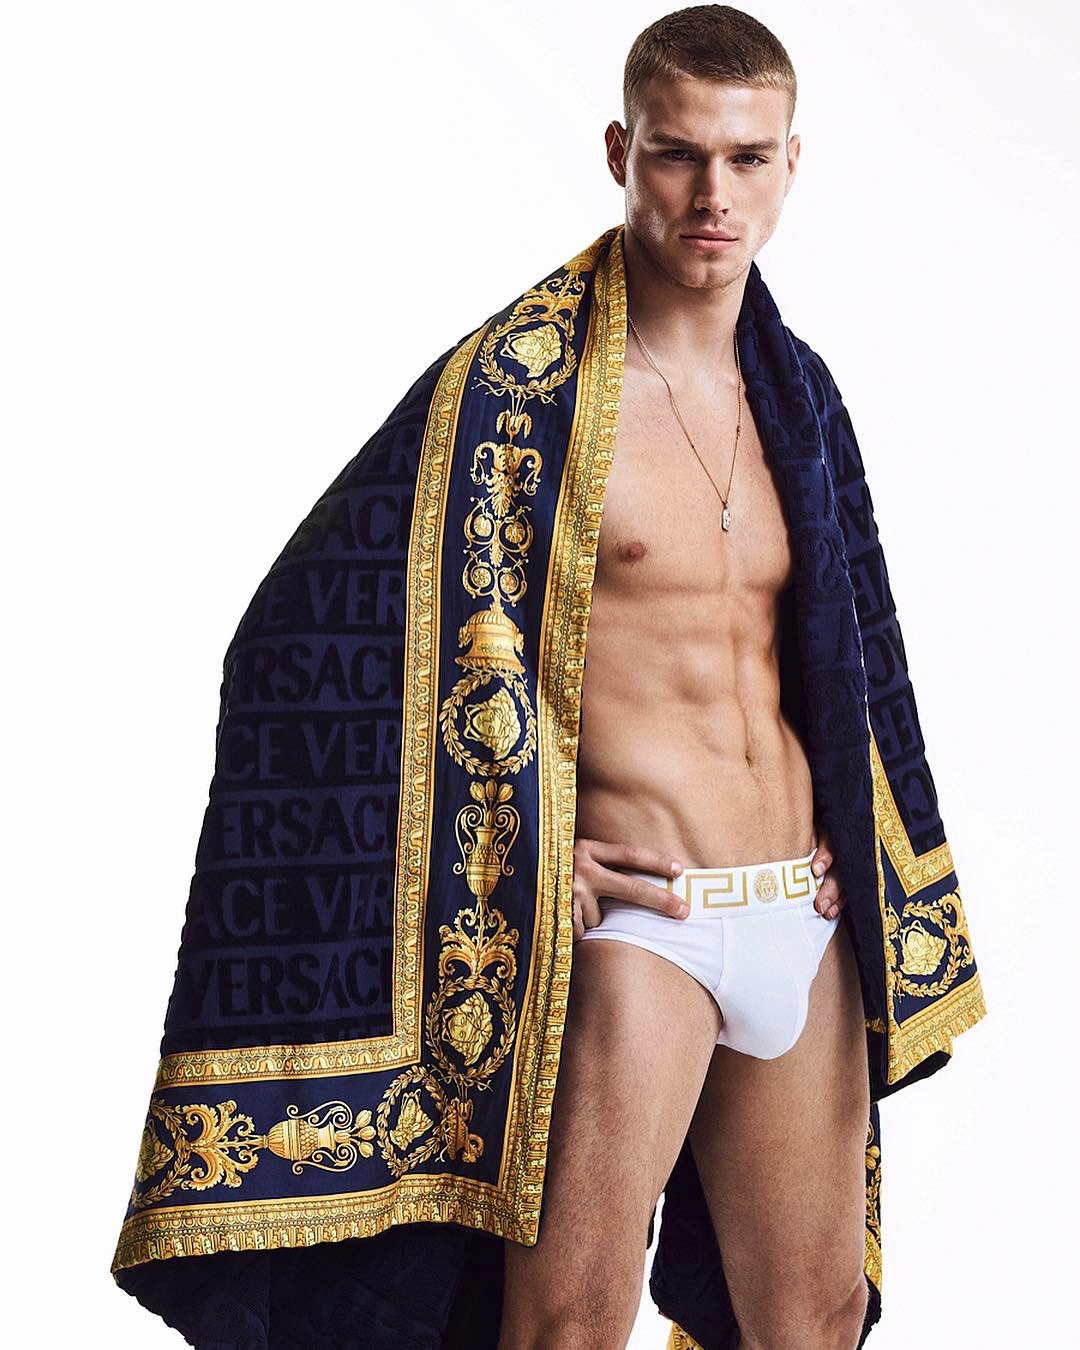 Matthew Noszka in Versace Greek Key briefs and Baroque towel on. 